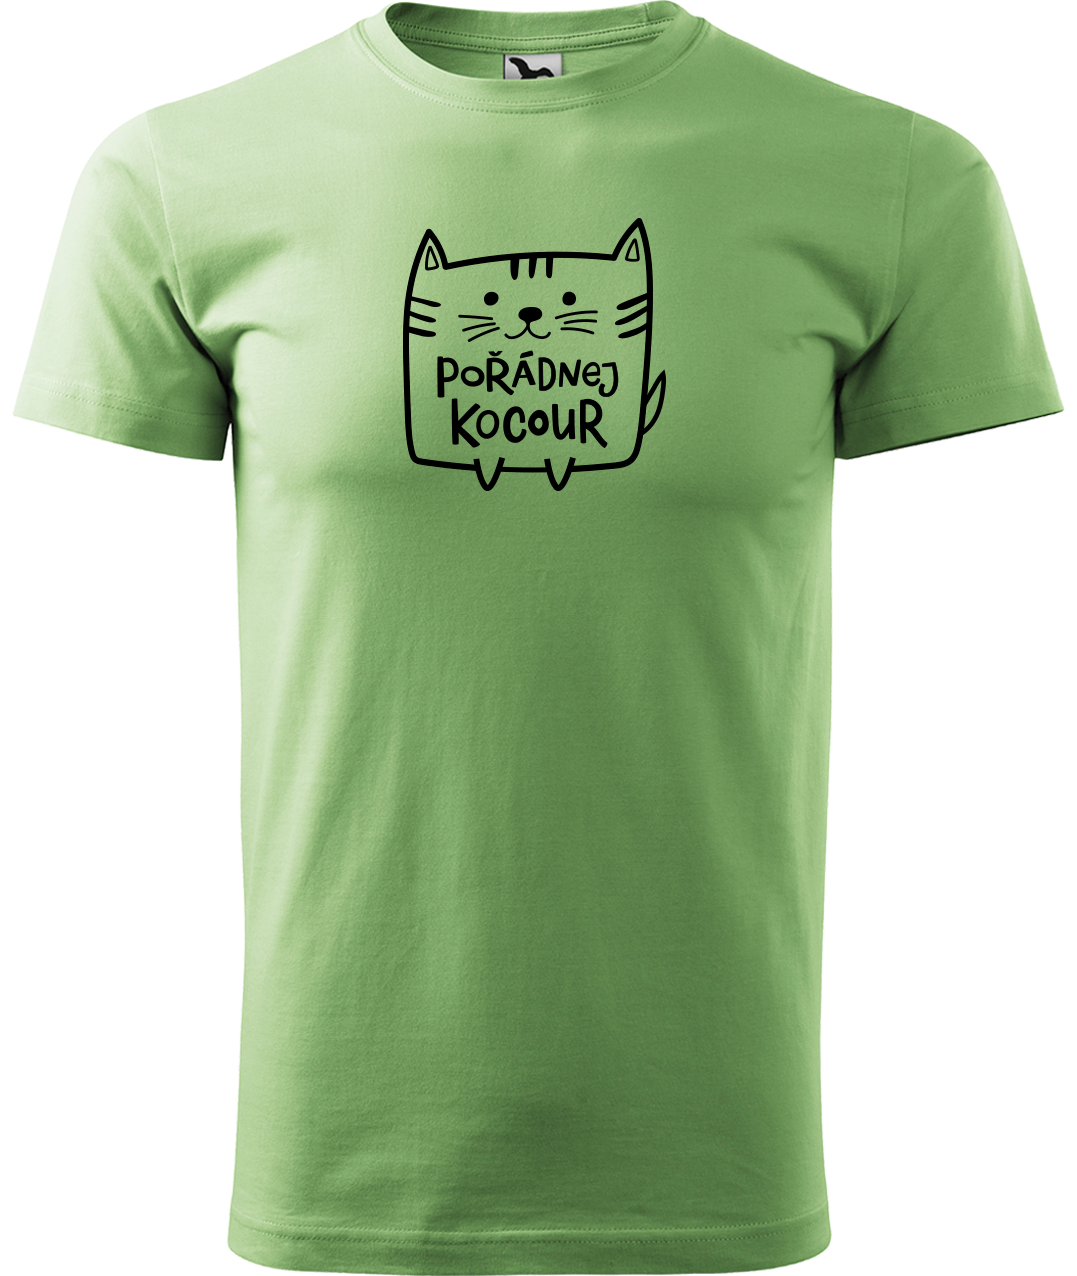 Pánské tričko s kočkou - Pořádnej kocour Velikost: S, Barva: Apple Green (92)